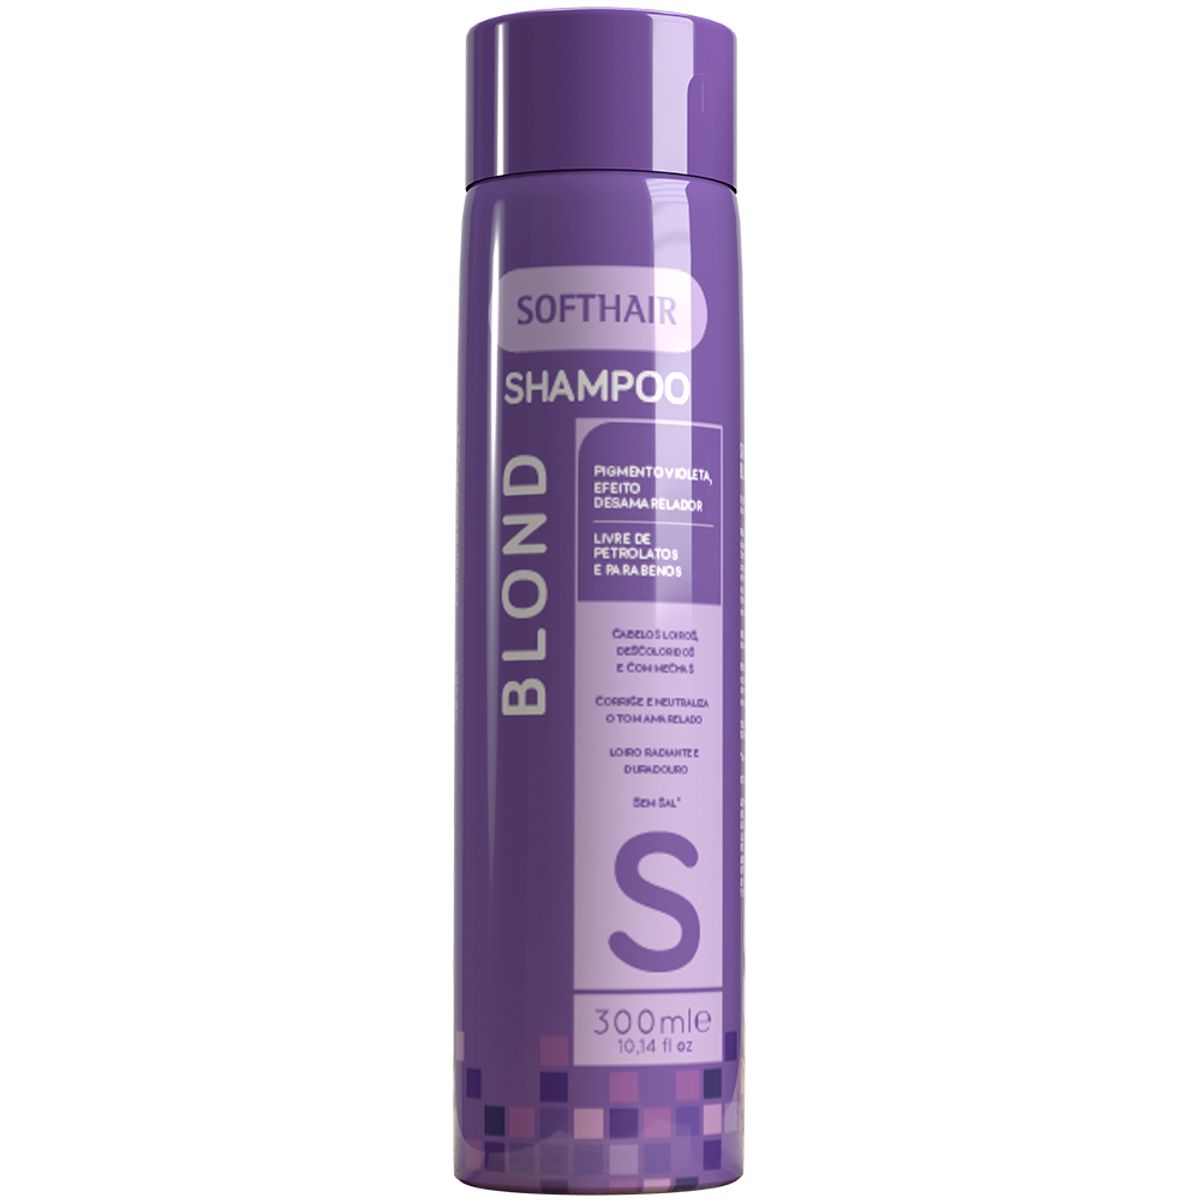 Shampoo Softhair Blond 300ml